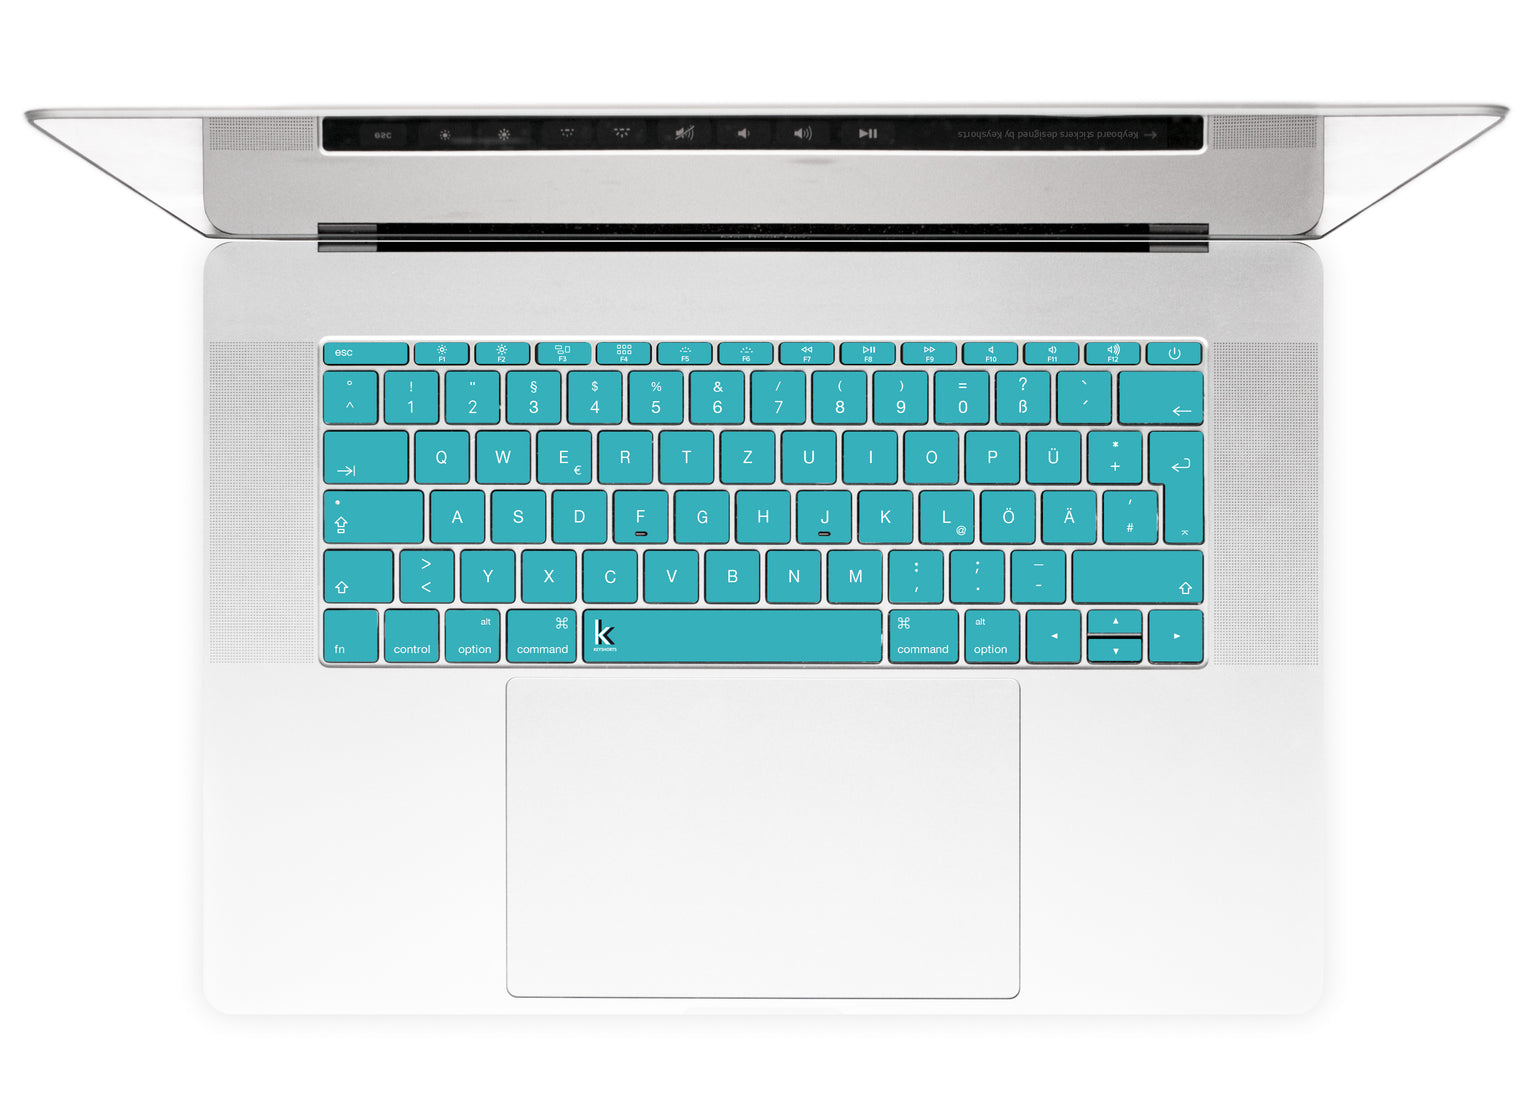 Teal Night MacBook Keyboard Stickers alternate DE